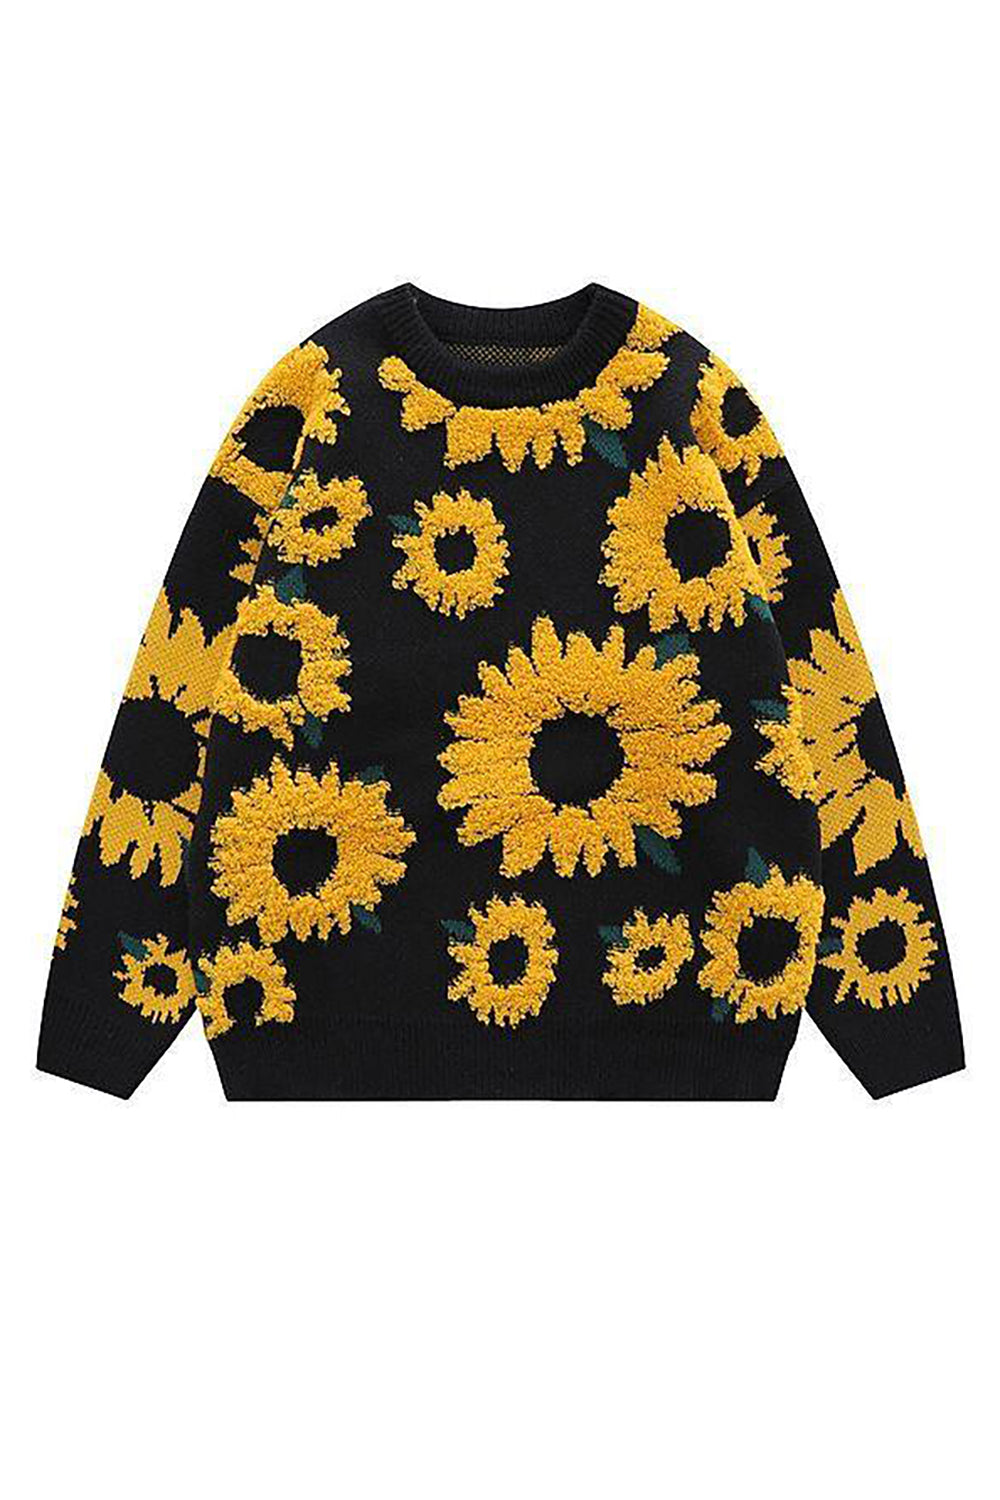 Round Neck Black Chrysanthemum Sweater